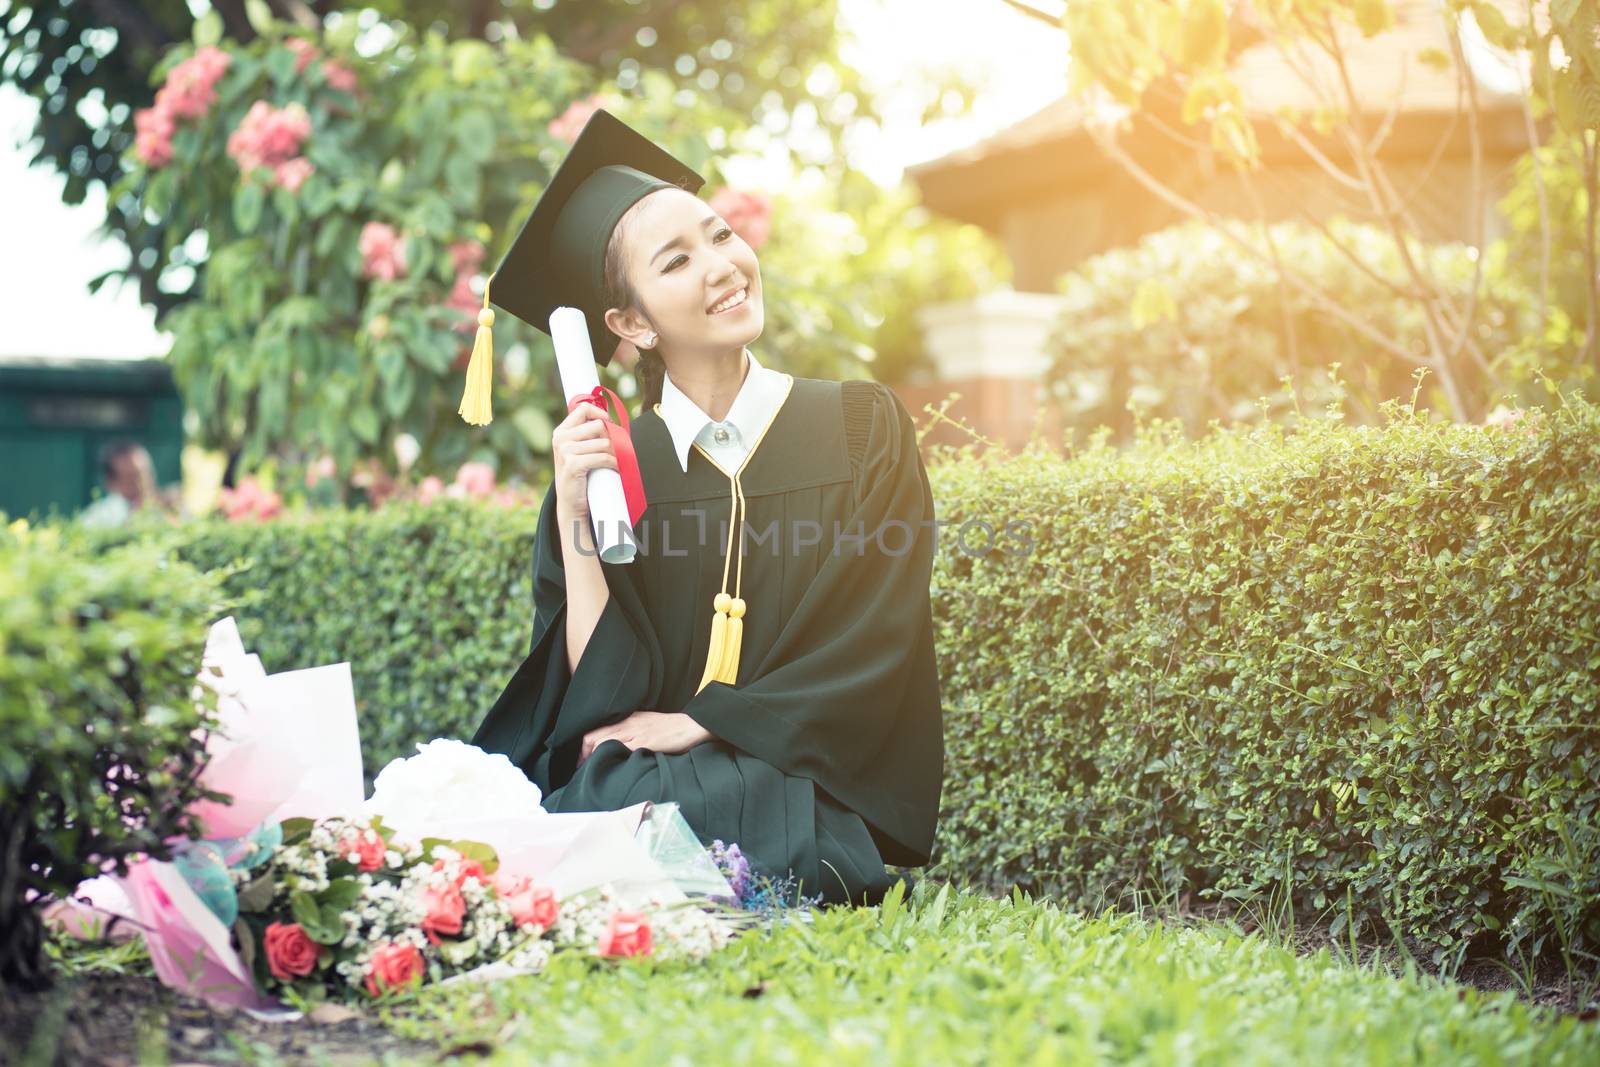 Happy graduated student girl - congratulations of education success.